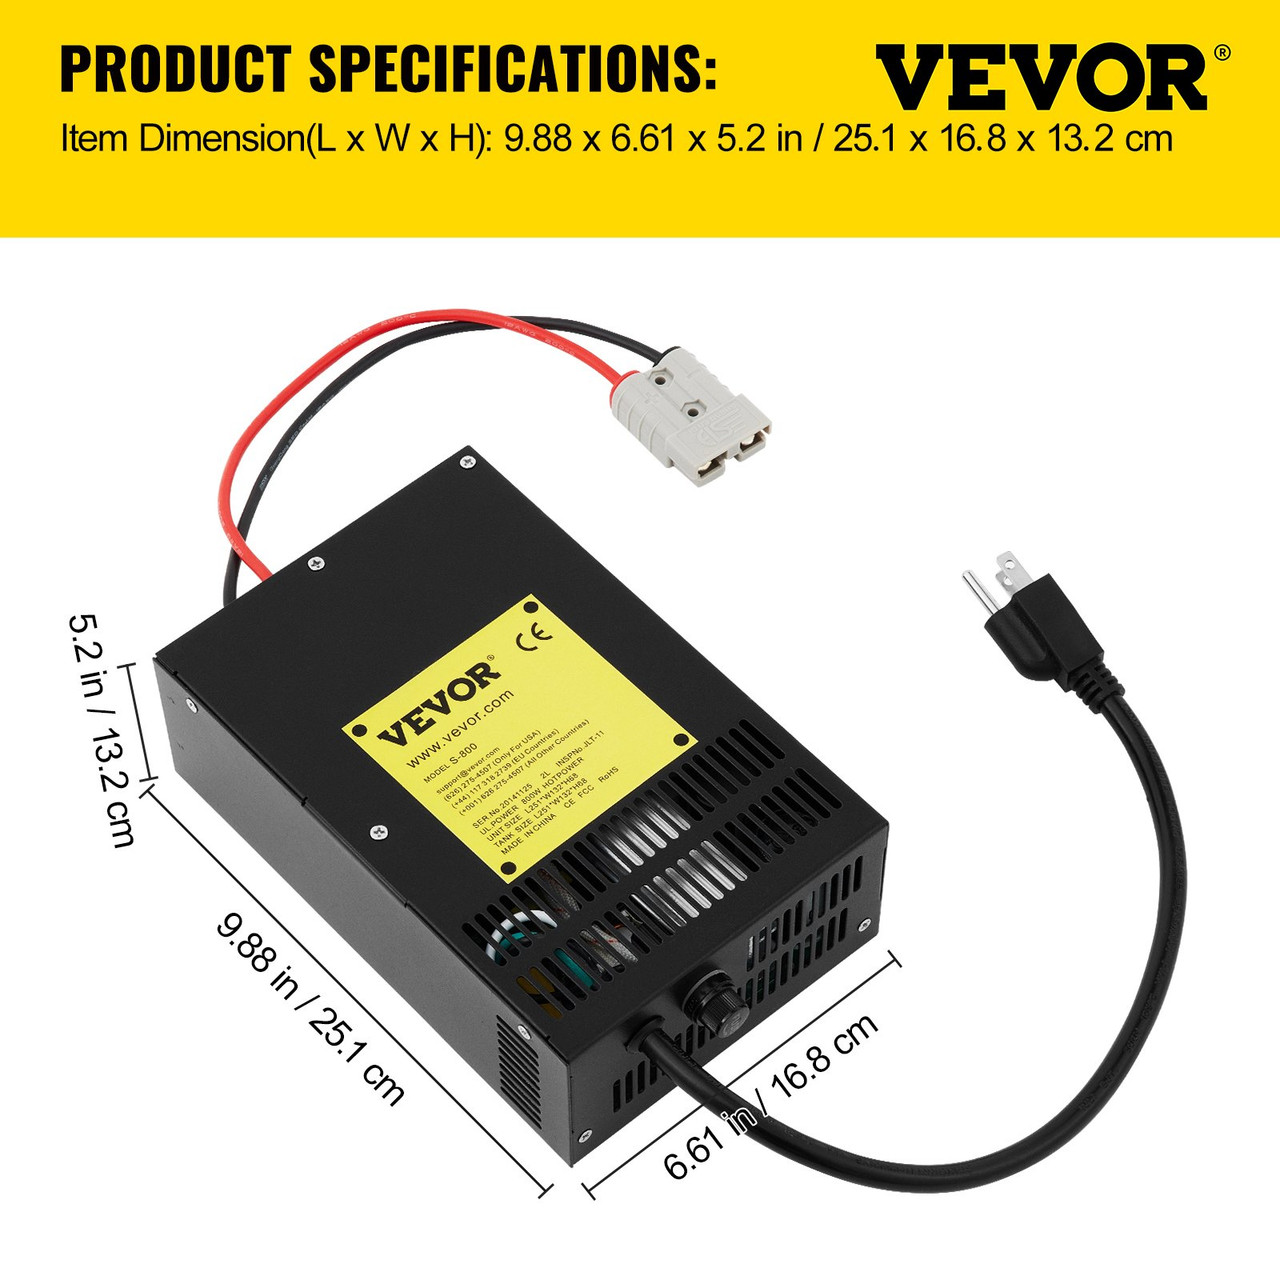 VEVOR RV Power Converter Charger, 110v AC to 12v DC, Power Supply